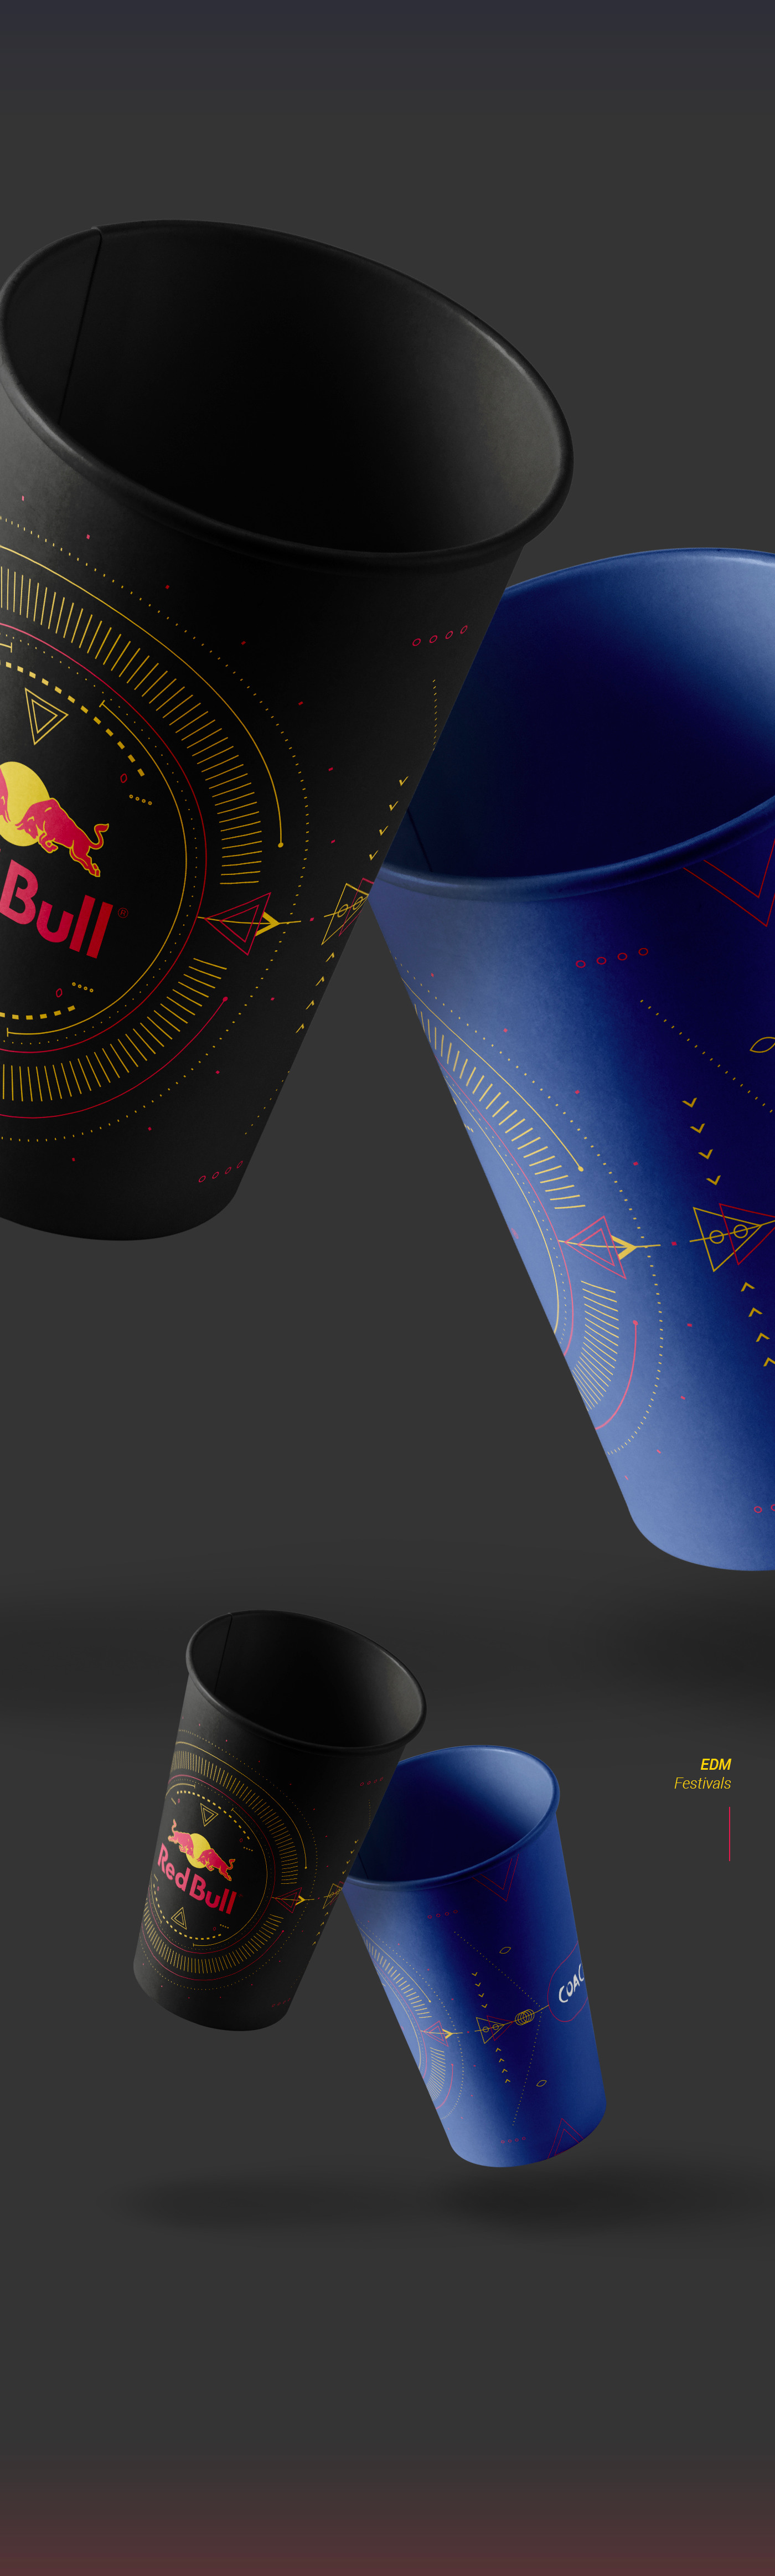 Red Bull cup design festival music poster summer disruptive hip hop edm